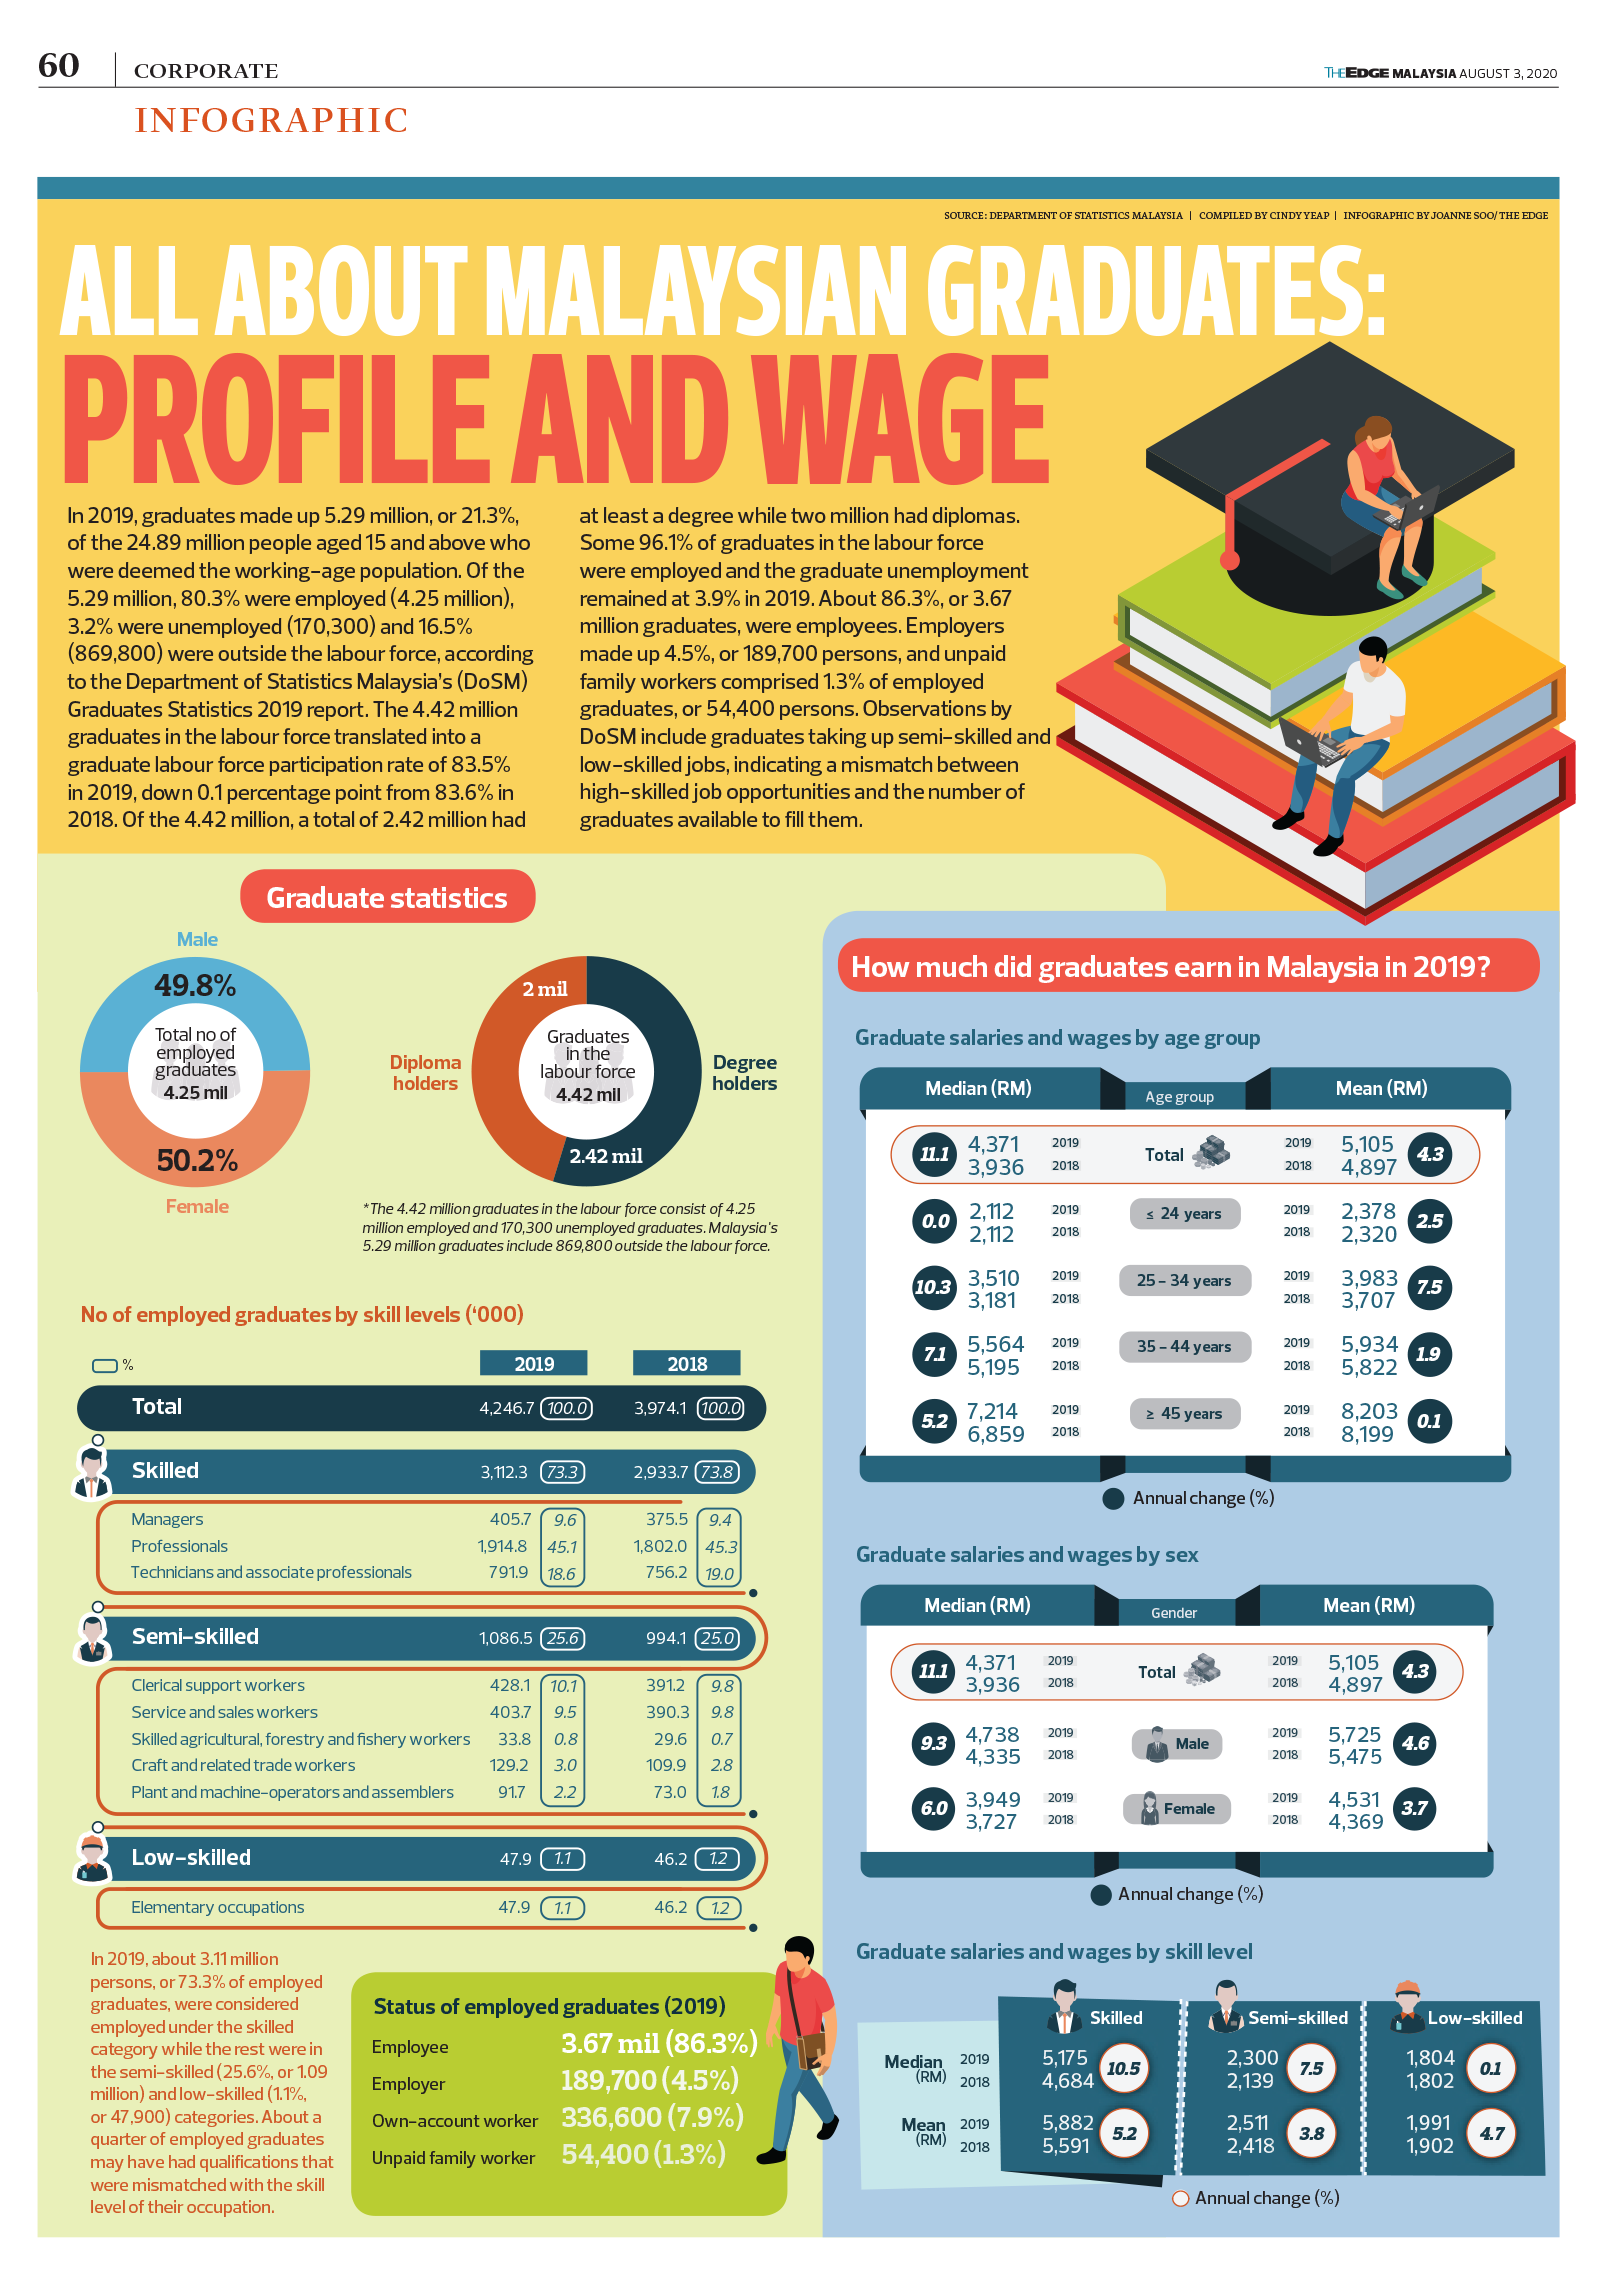 All about Malaysian graduates: Profile and Wage 2020